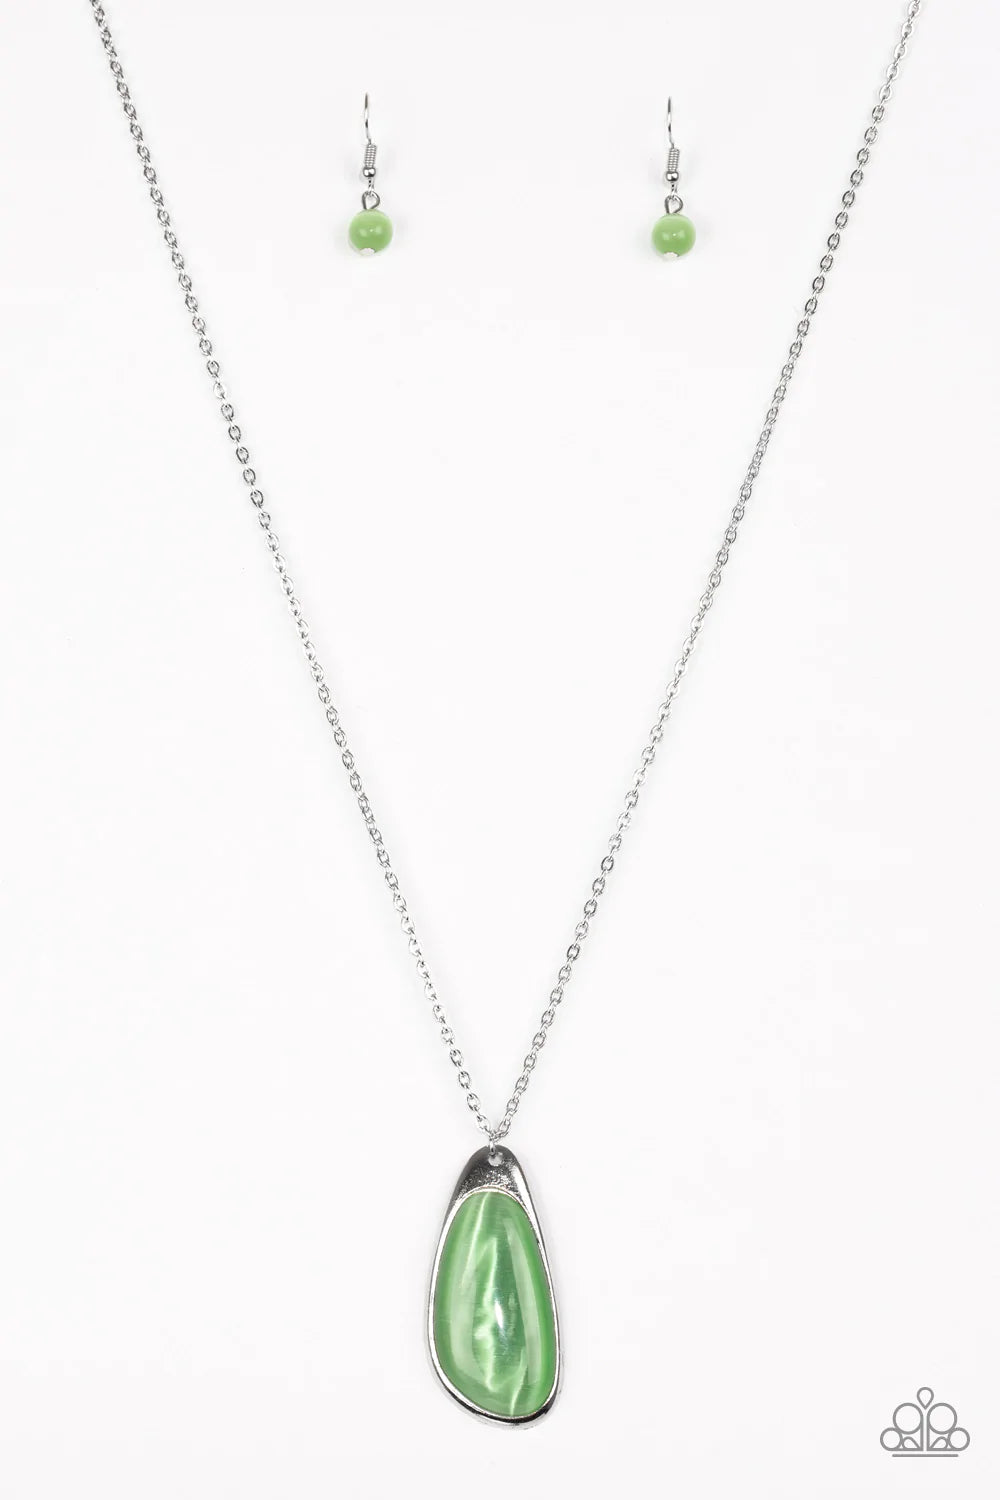 Paparazzi Necklace ~ Magically Modern - Green